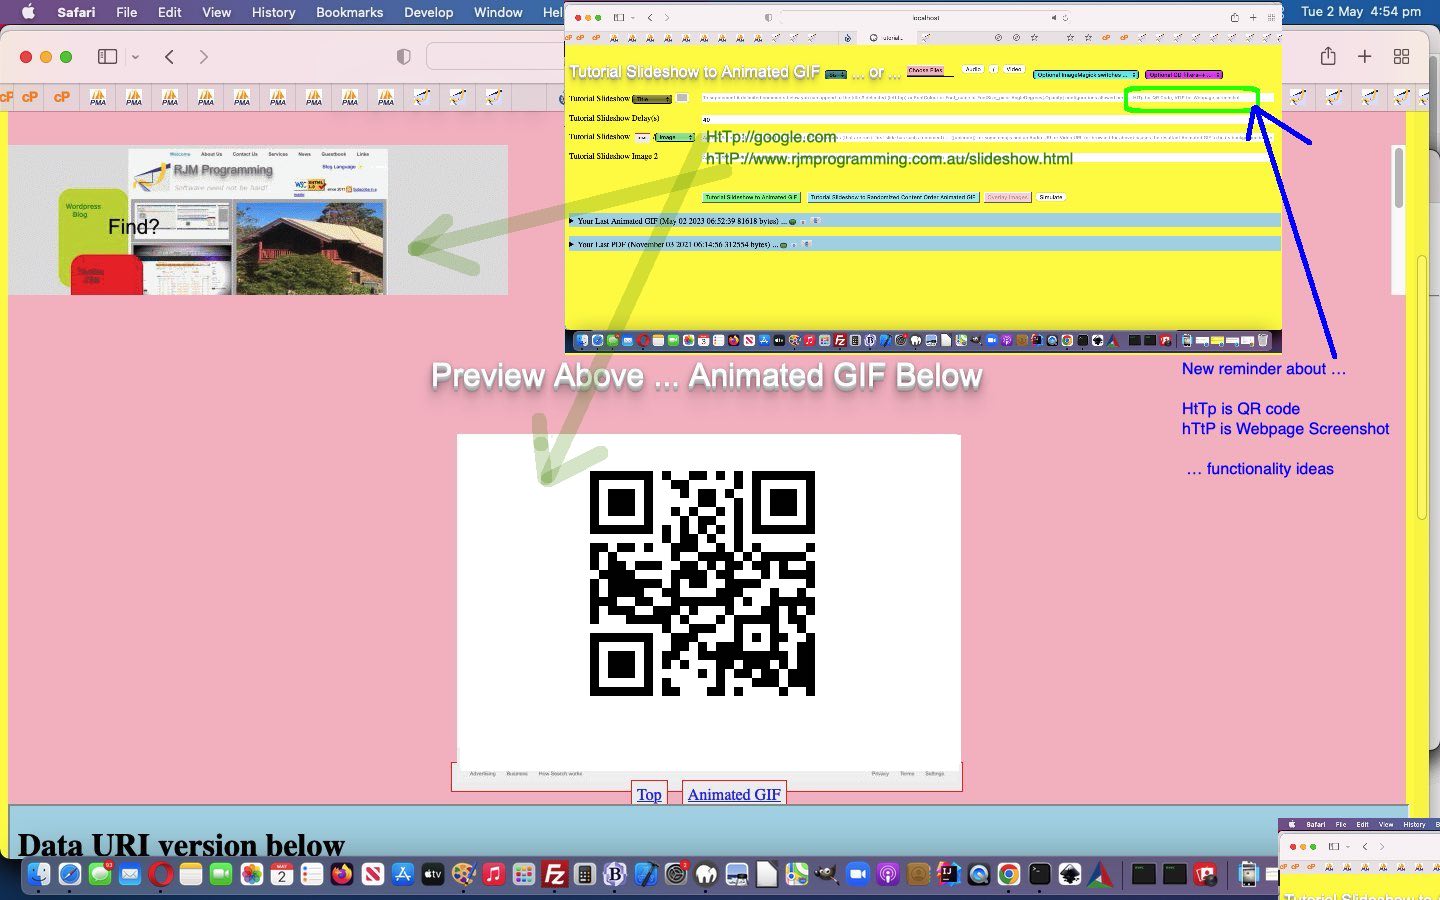 Animated GIF Slide QR Code and Webpage Screenshot URL Tutorial